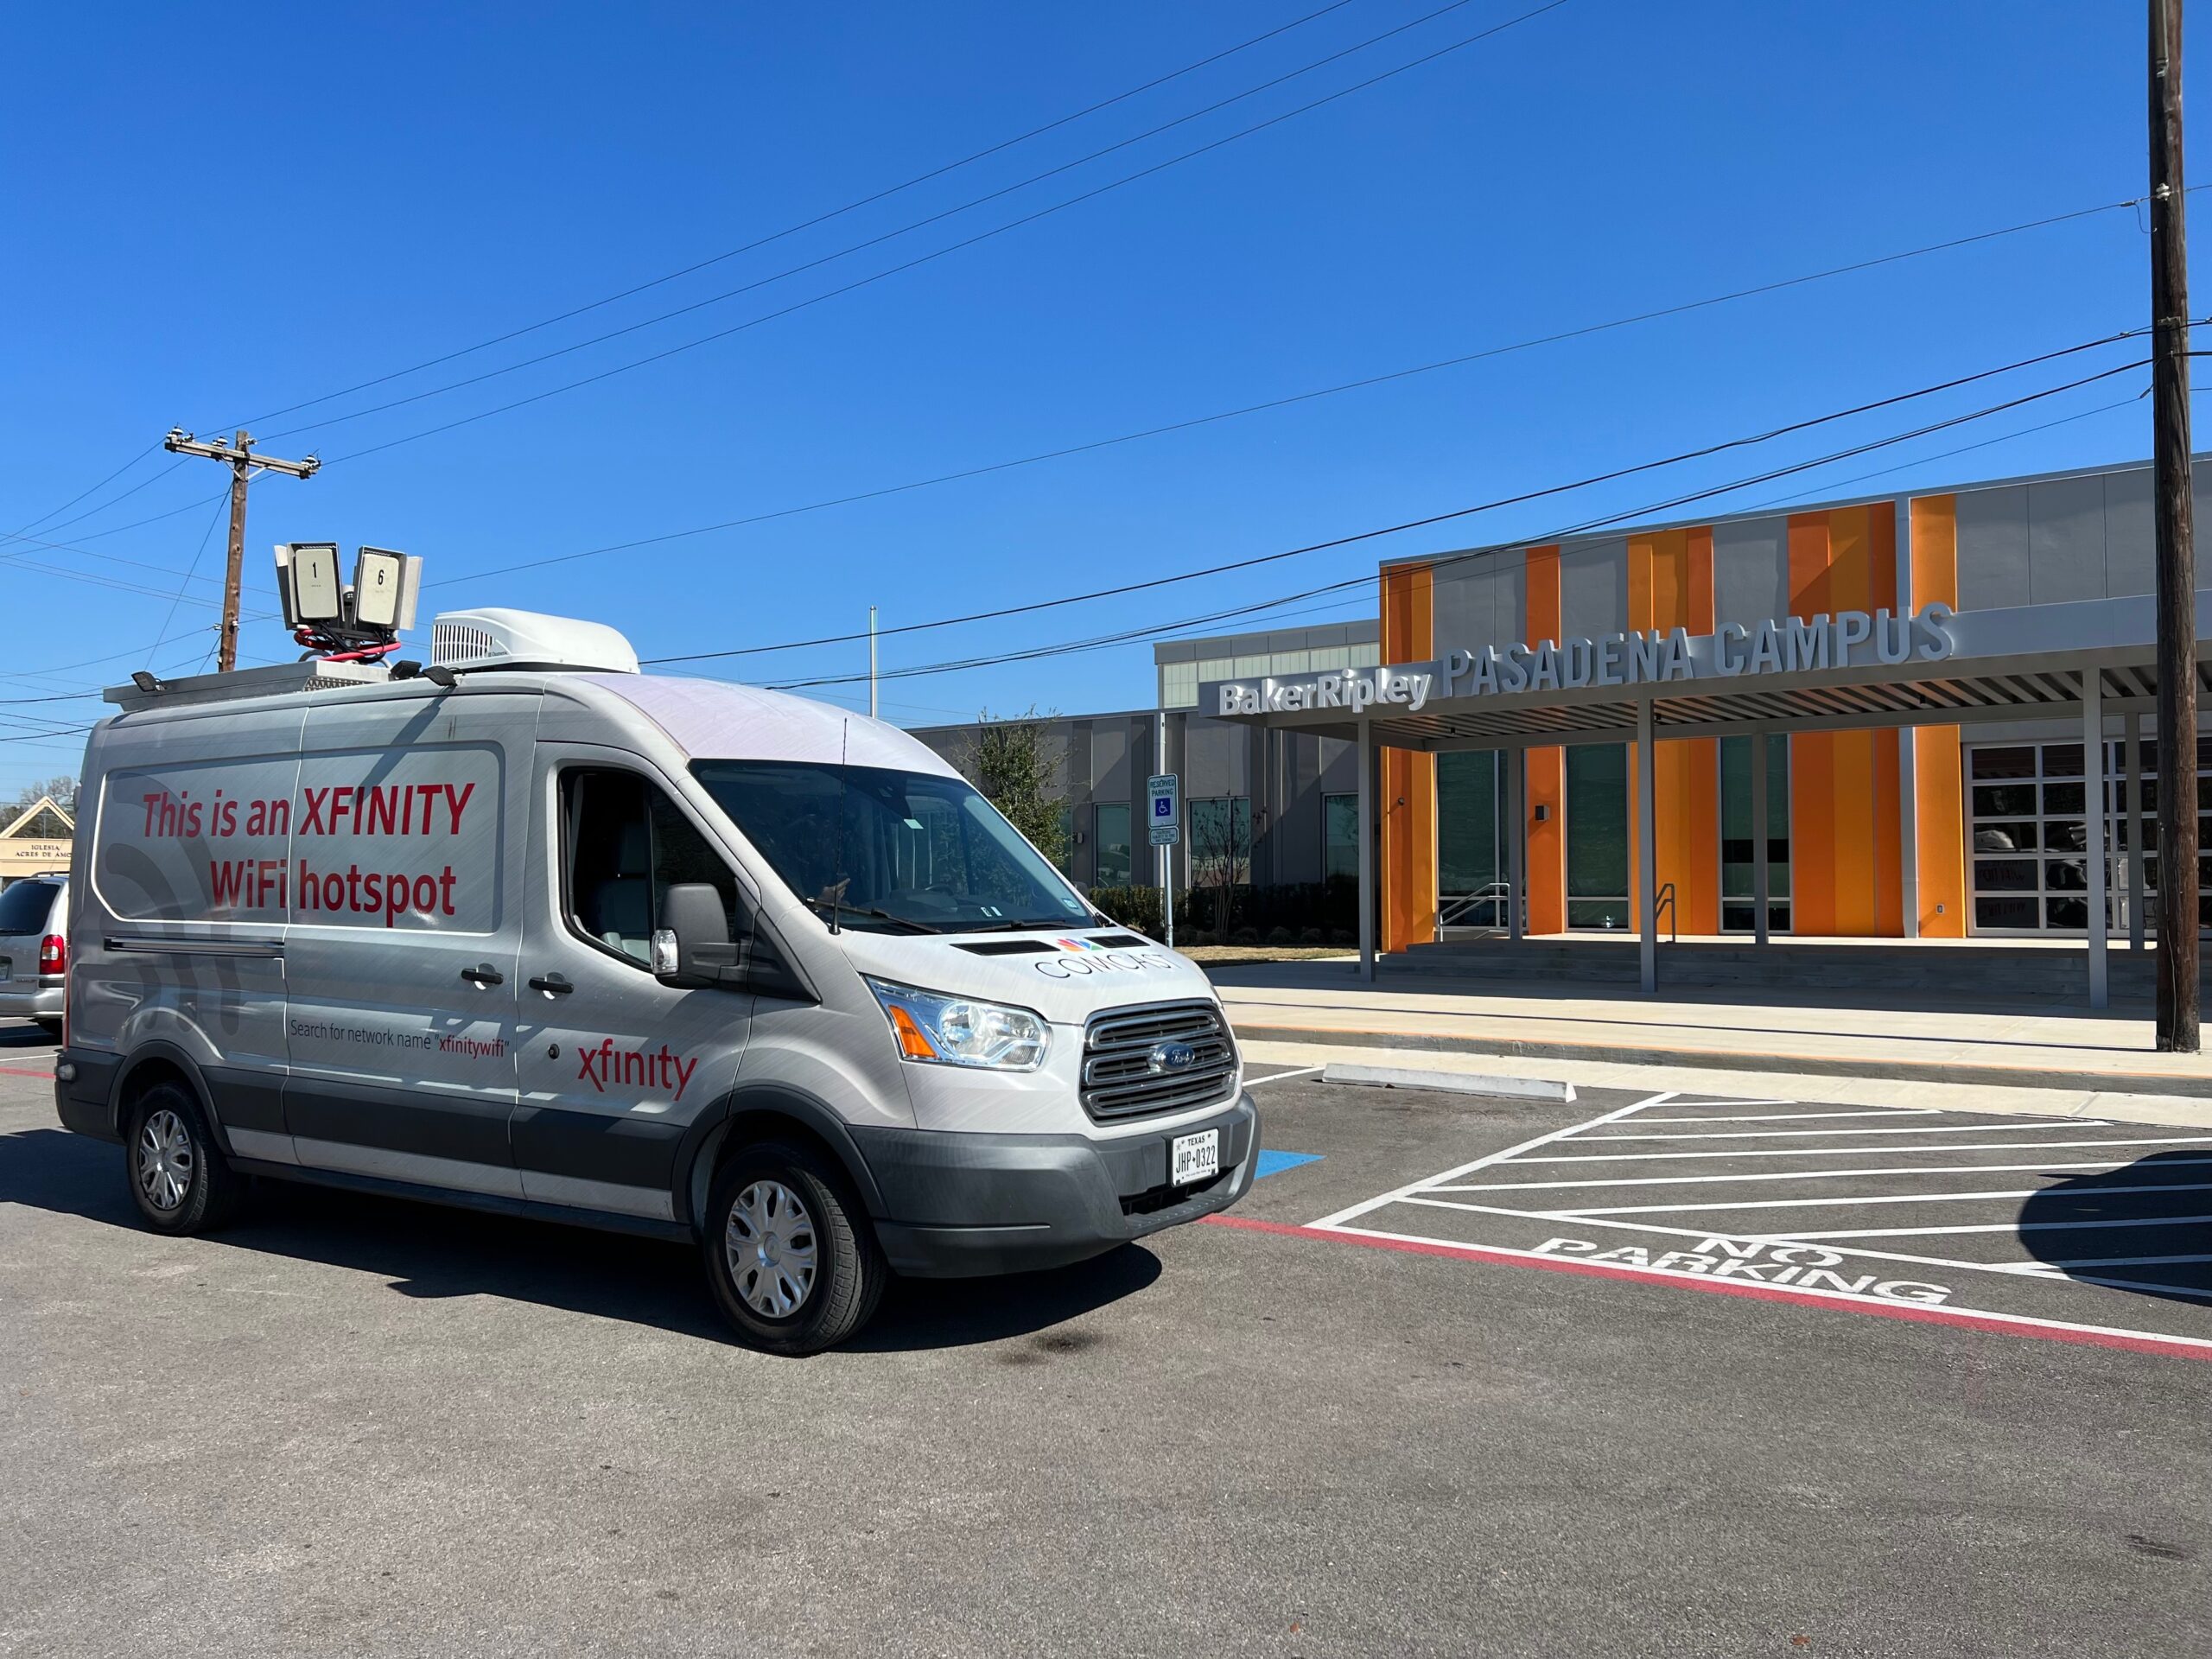 Xfinity's Hotspot Van arrives in Pasadena, Texas.